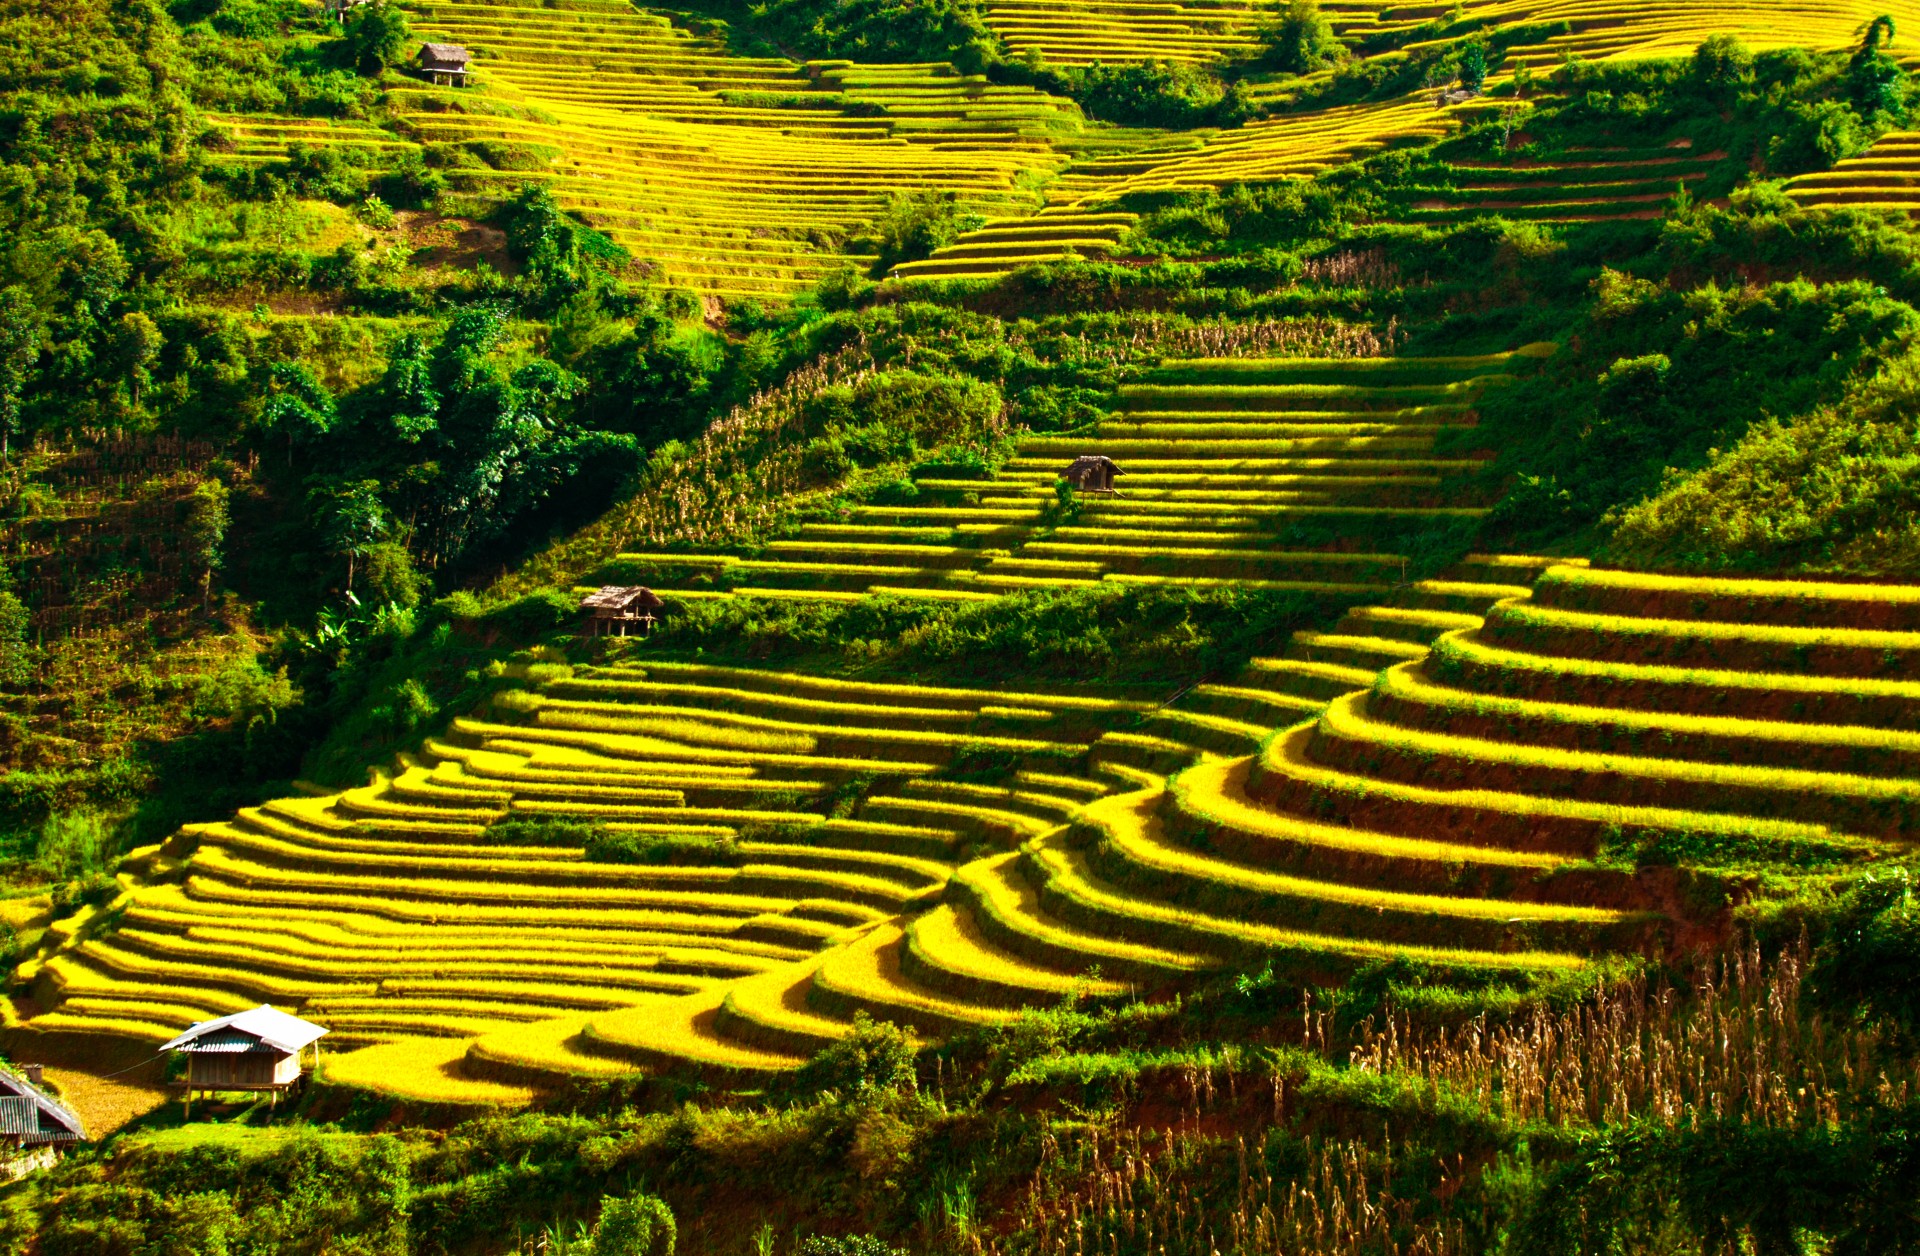 Terraced fields in Mu Cang Chai district, Yen Bai, Vietnam's northwest